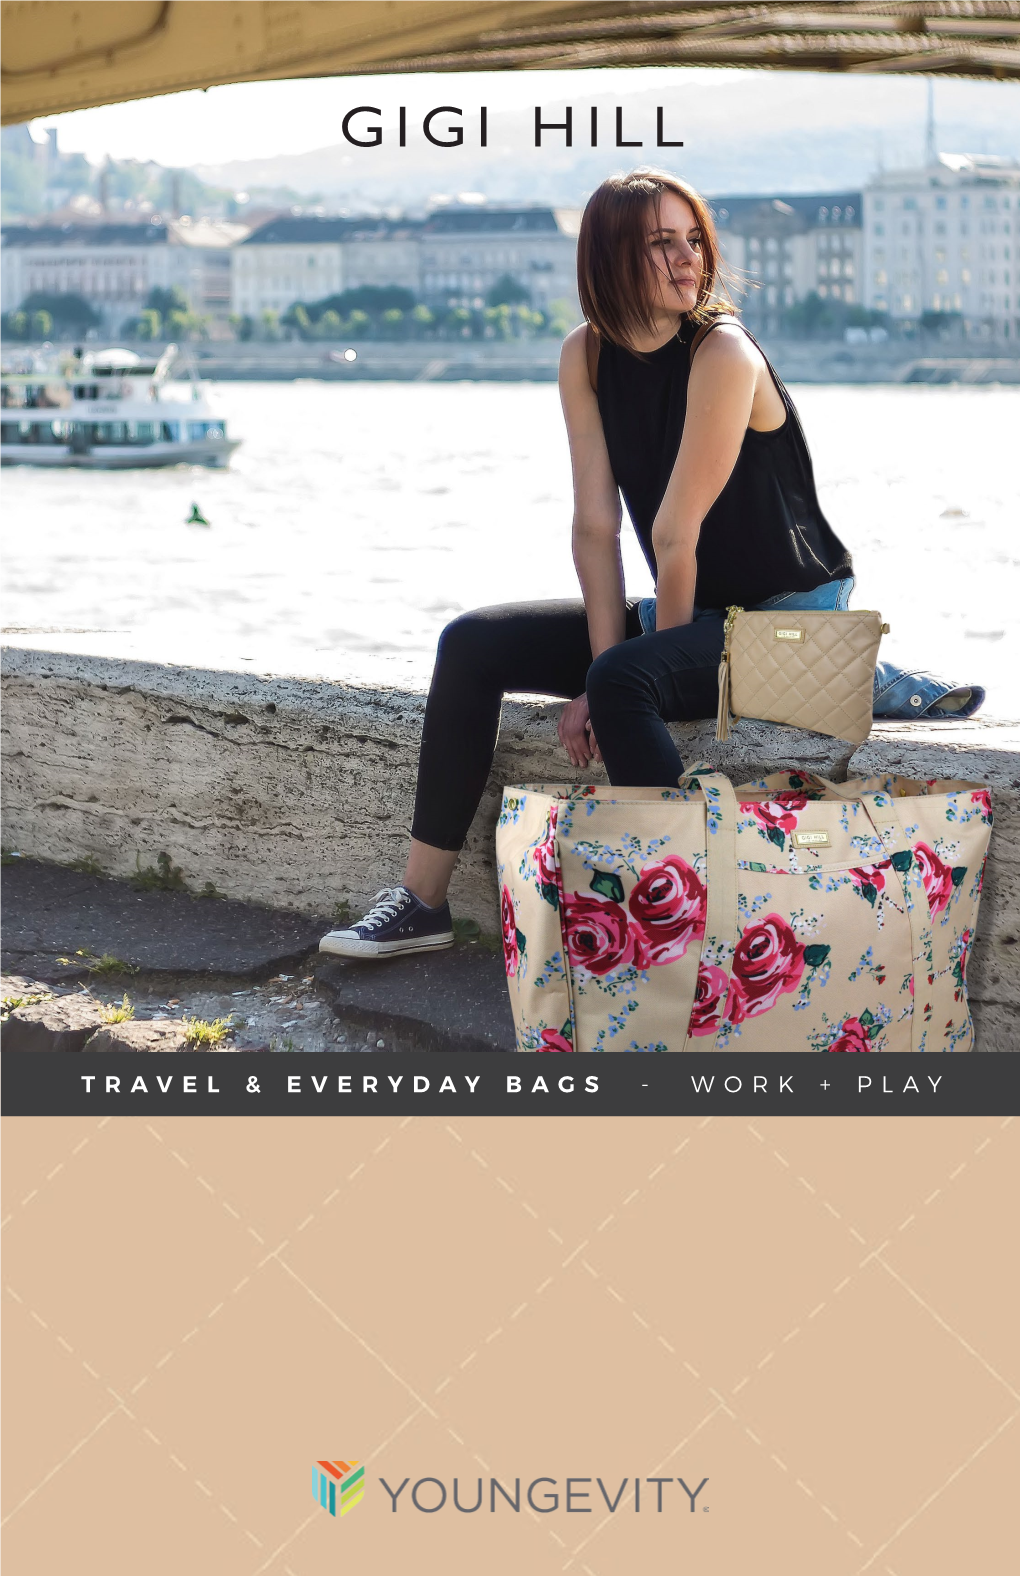 Travel & Everyday Bags